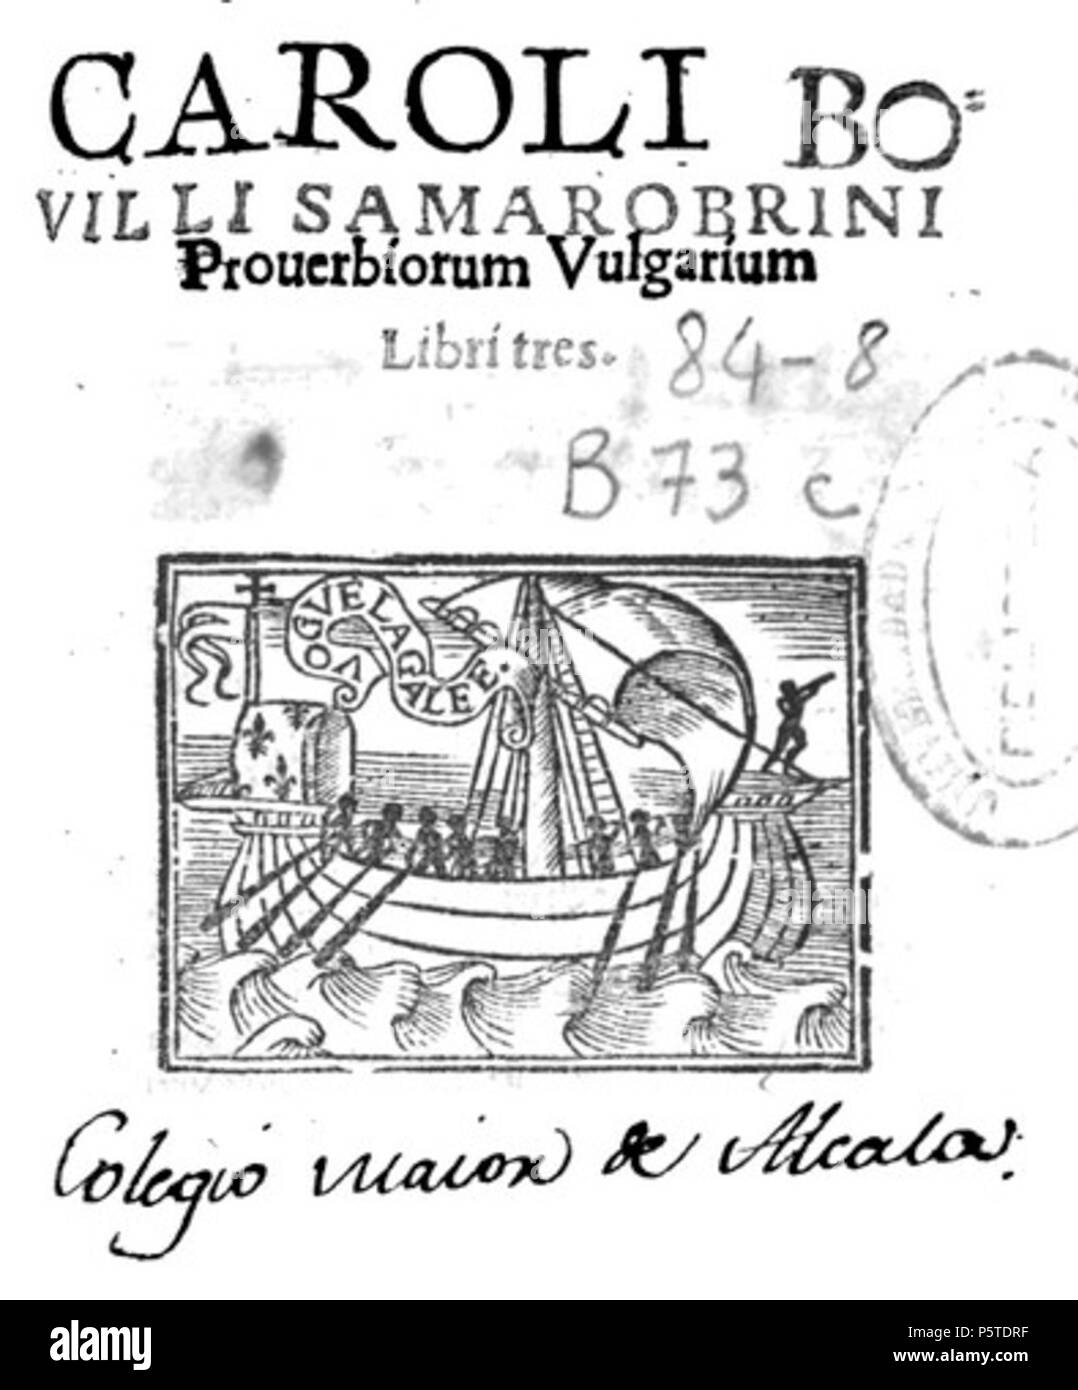 N/A. Englisch: Caroli Bouilli samarobrini Prouerbiorum vulgarium (1531) Charles de Bovelles (1479-1567) Português: Caroli Bouilli samarobrini Prouerbiorum vulgarium (1531) Charles de Bovelles (1479-1567). 1531. Charles de Bovelles (1479-1567) 276 Carolus Bovillus (1479-1567) Stockfoto